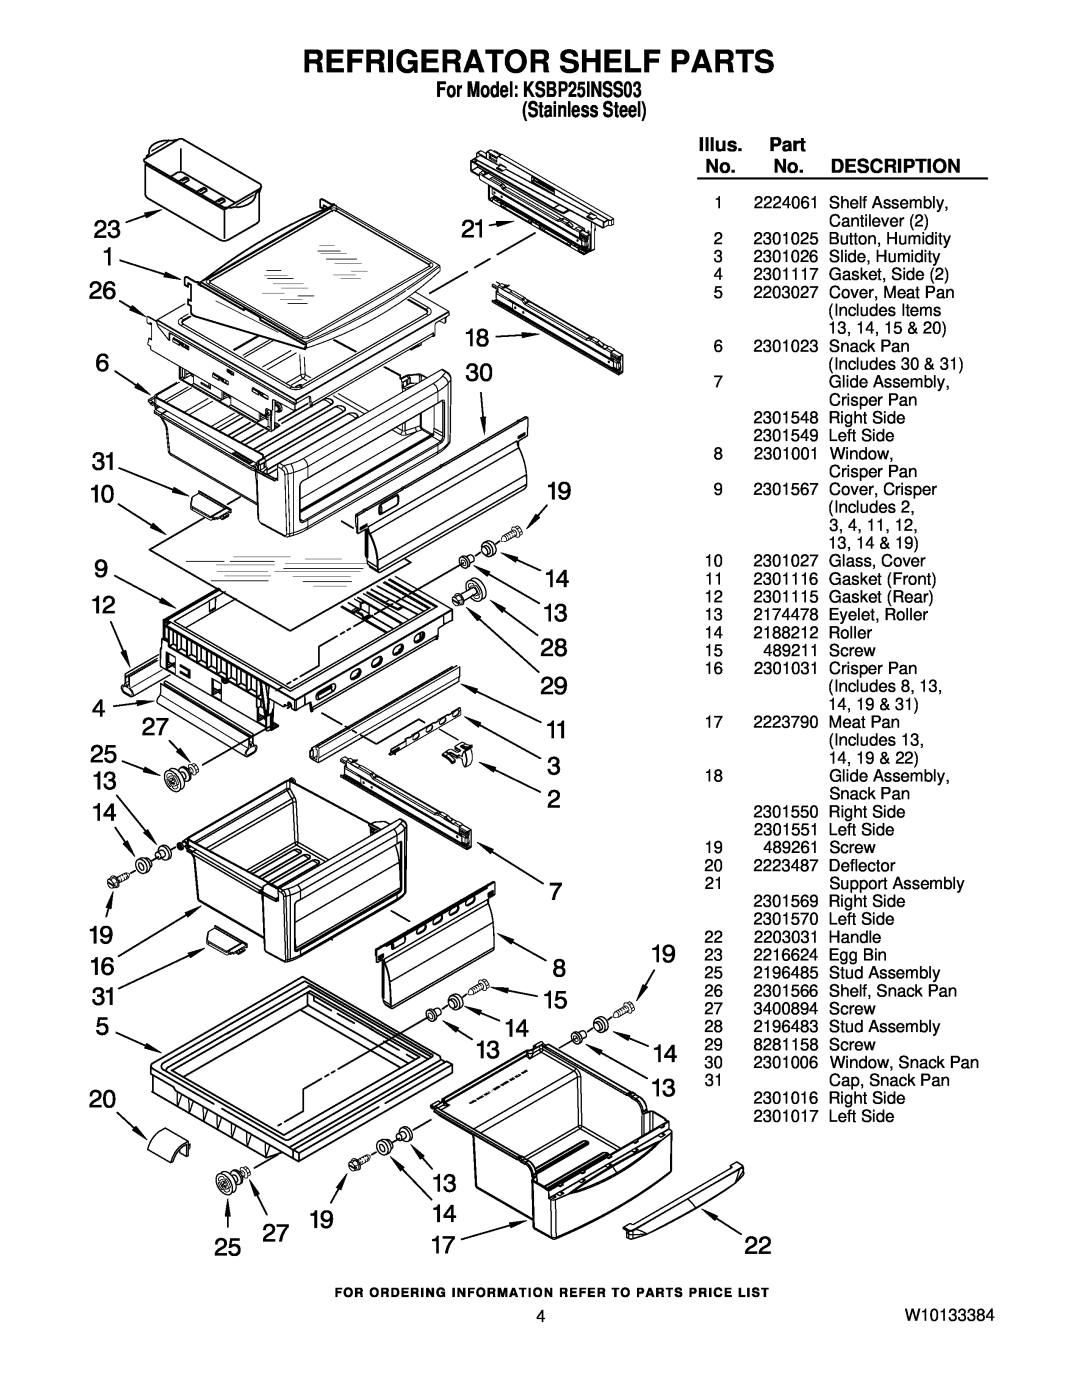 KitchenAid manual Refrigerator Shelf Parts, For Model KSBP25INSS03 Stainless Steel, Illus, Description 